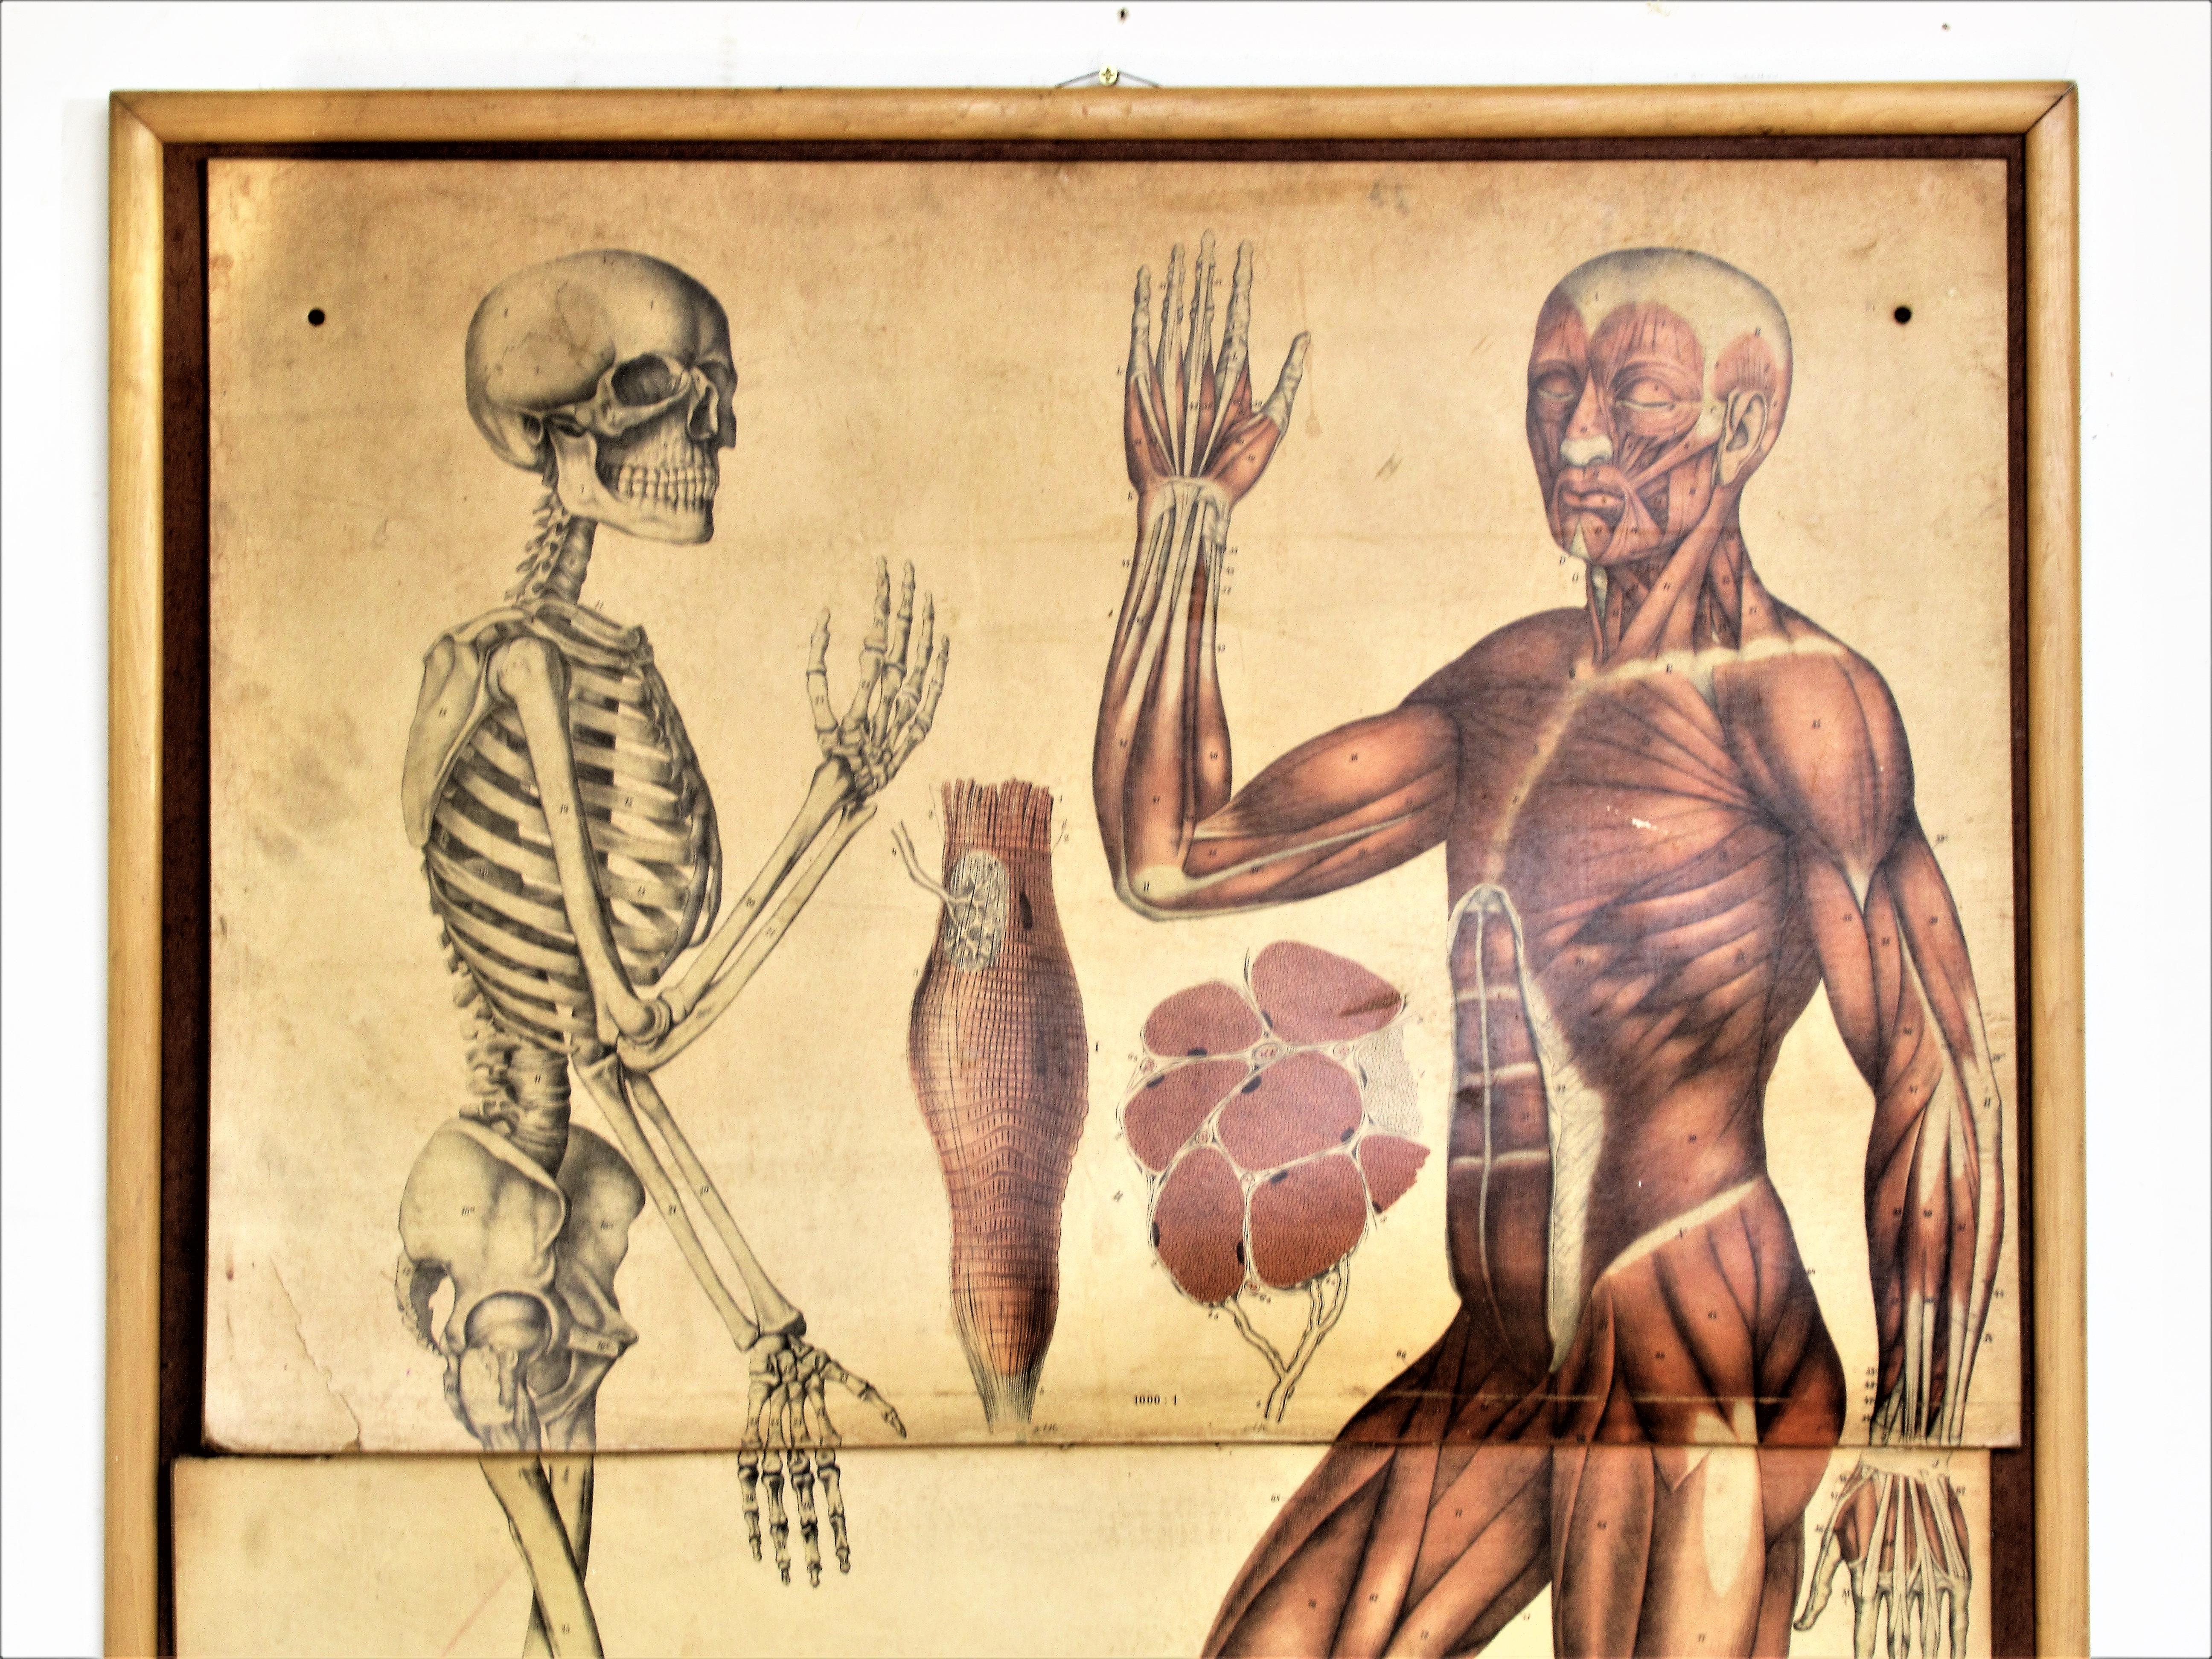 19th century anatomy